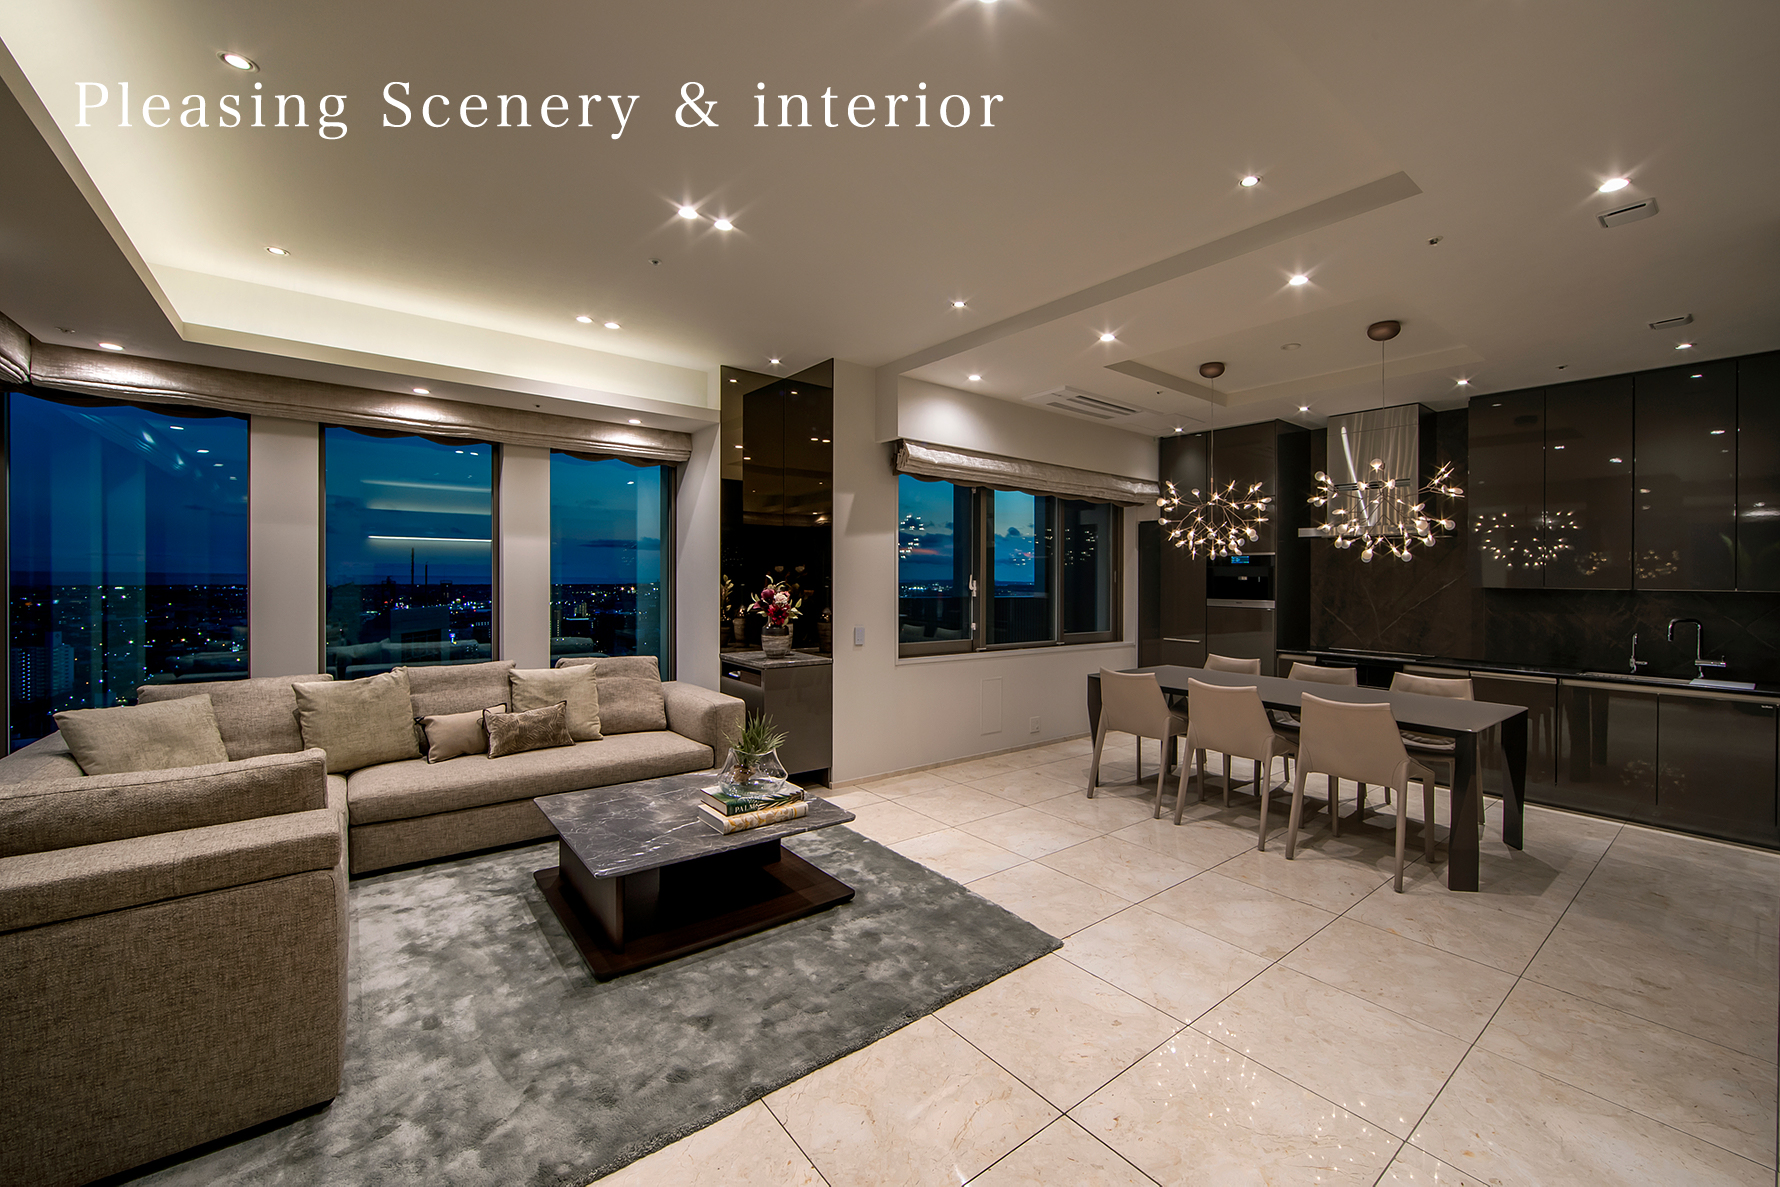 Pleasing Scenery & interior